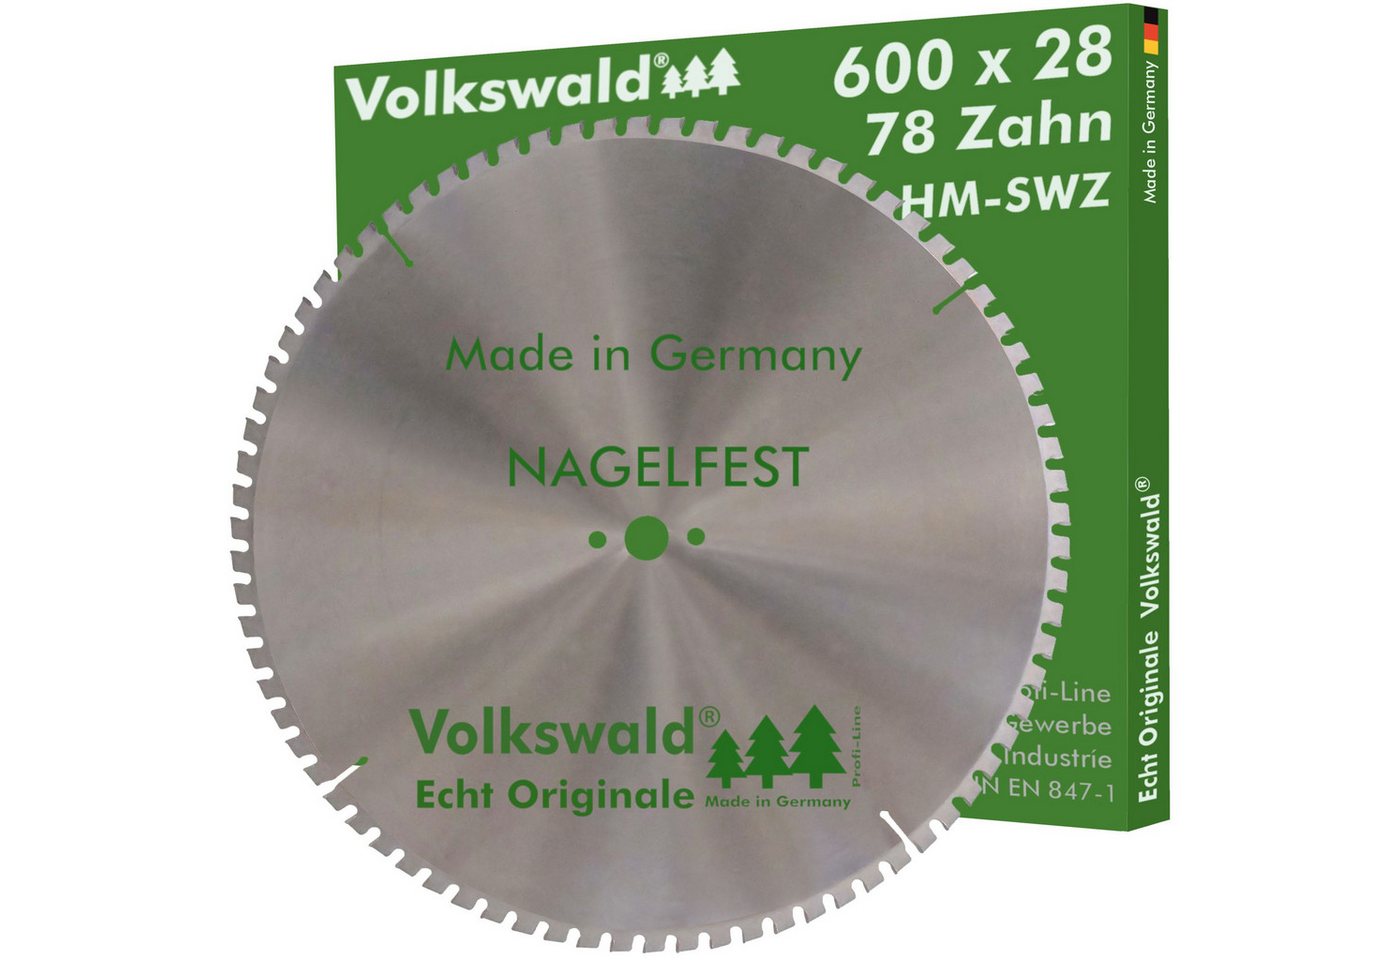 Volkswald Kreissägeblatt Volkswald ® HM-Sägeblatt SWZ 600 x 28 mm Z=78 nagelfest Kreissägeblatt, Echt Originale Volkswald® Made in Germany von Volkswald